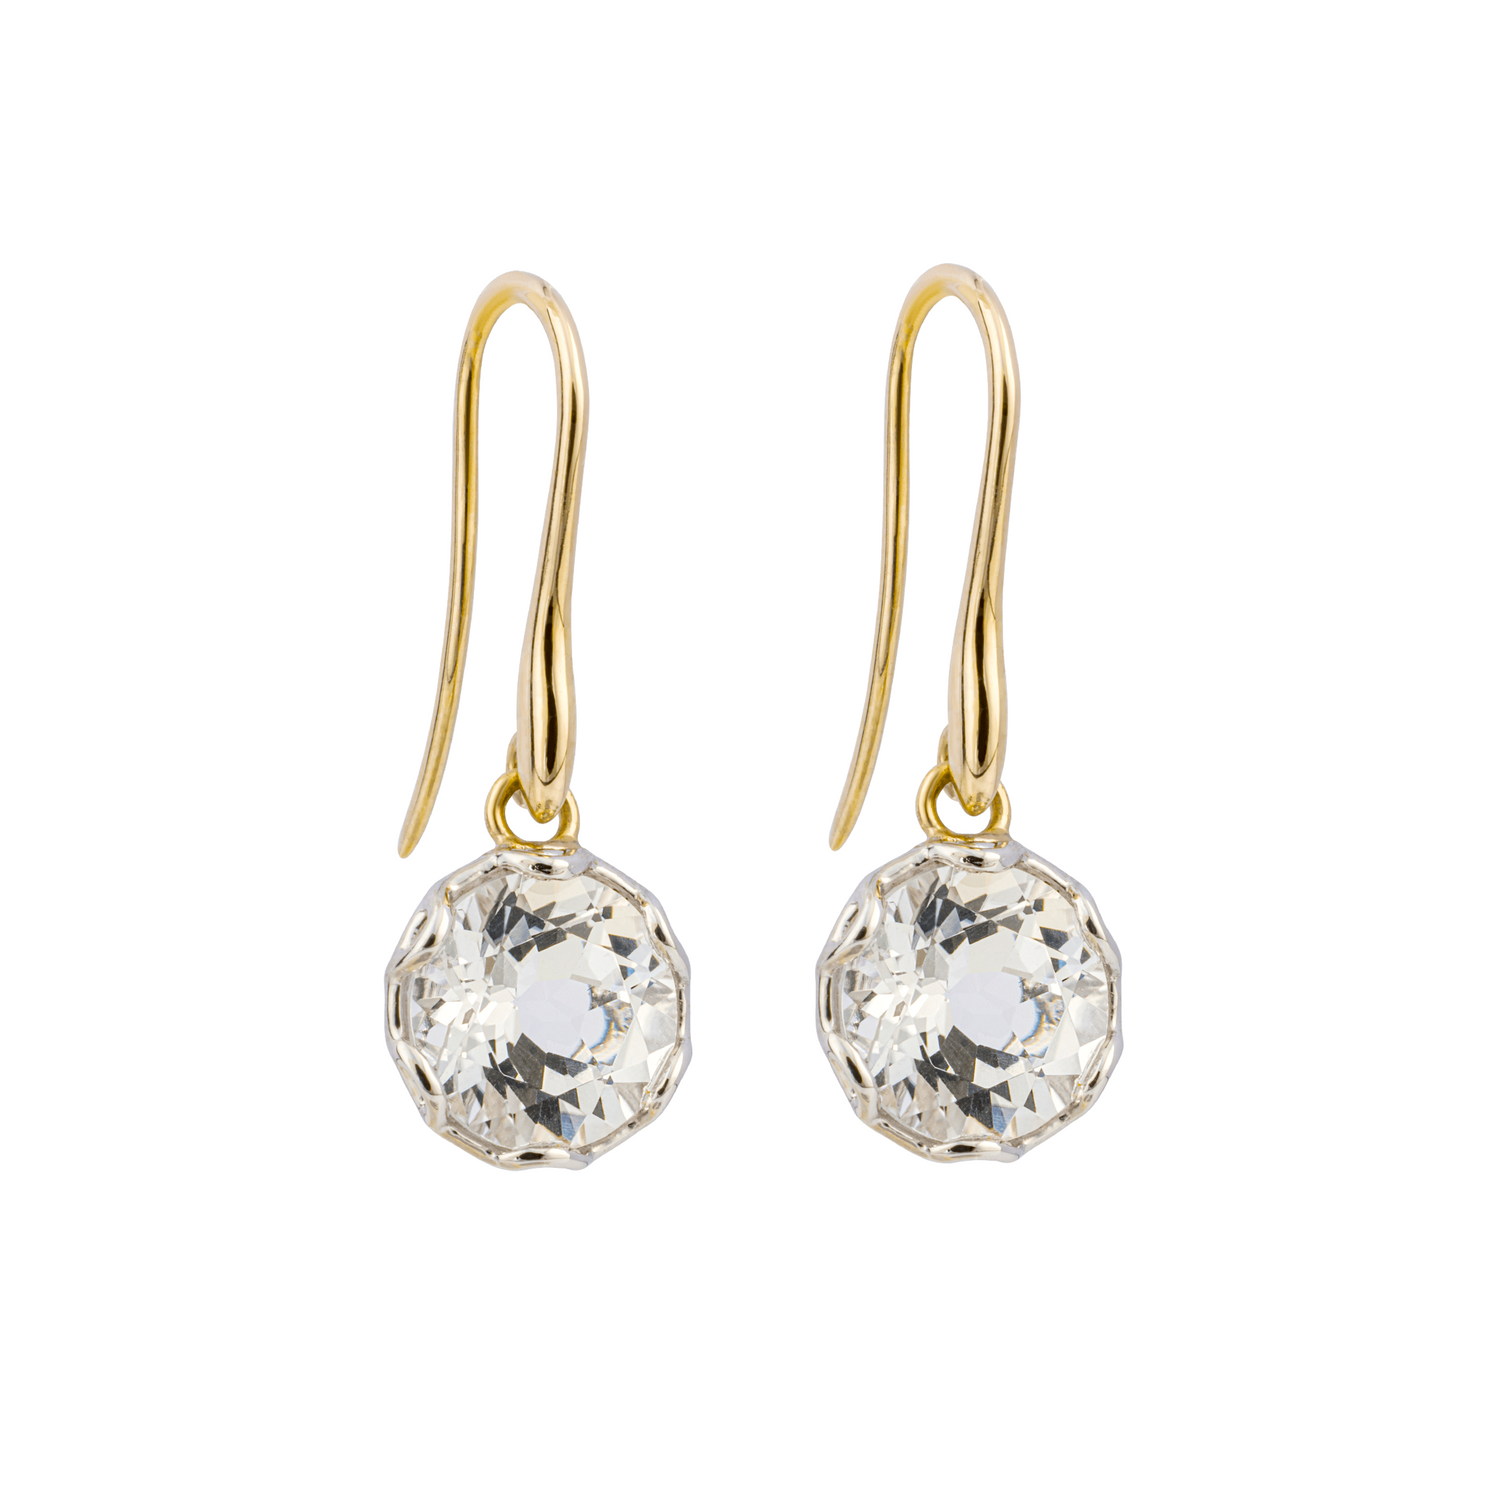 Round White Topaz Drop Earrings in 9ct Gold - Robert Anthony Jewellers, Edinburgh